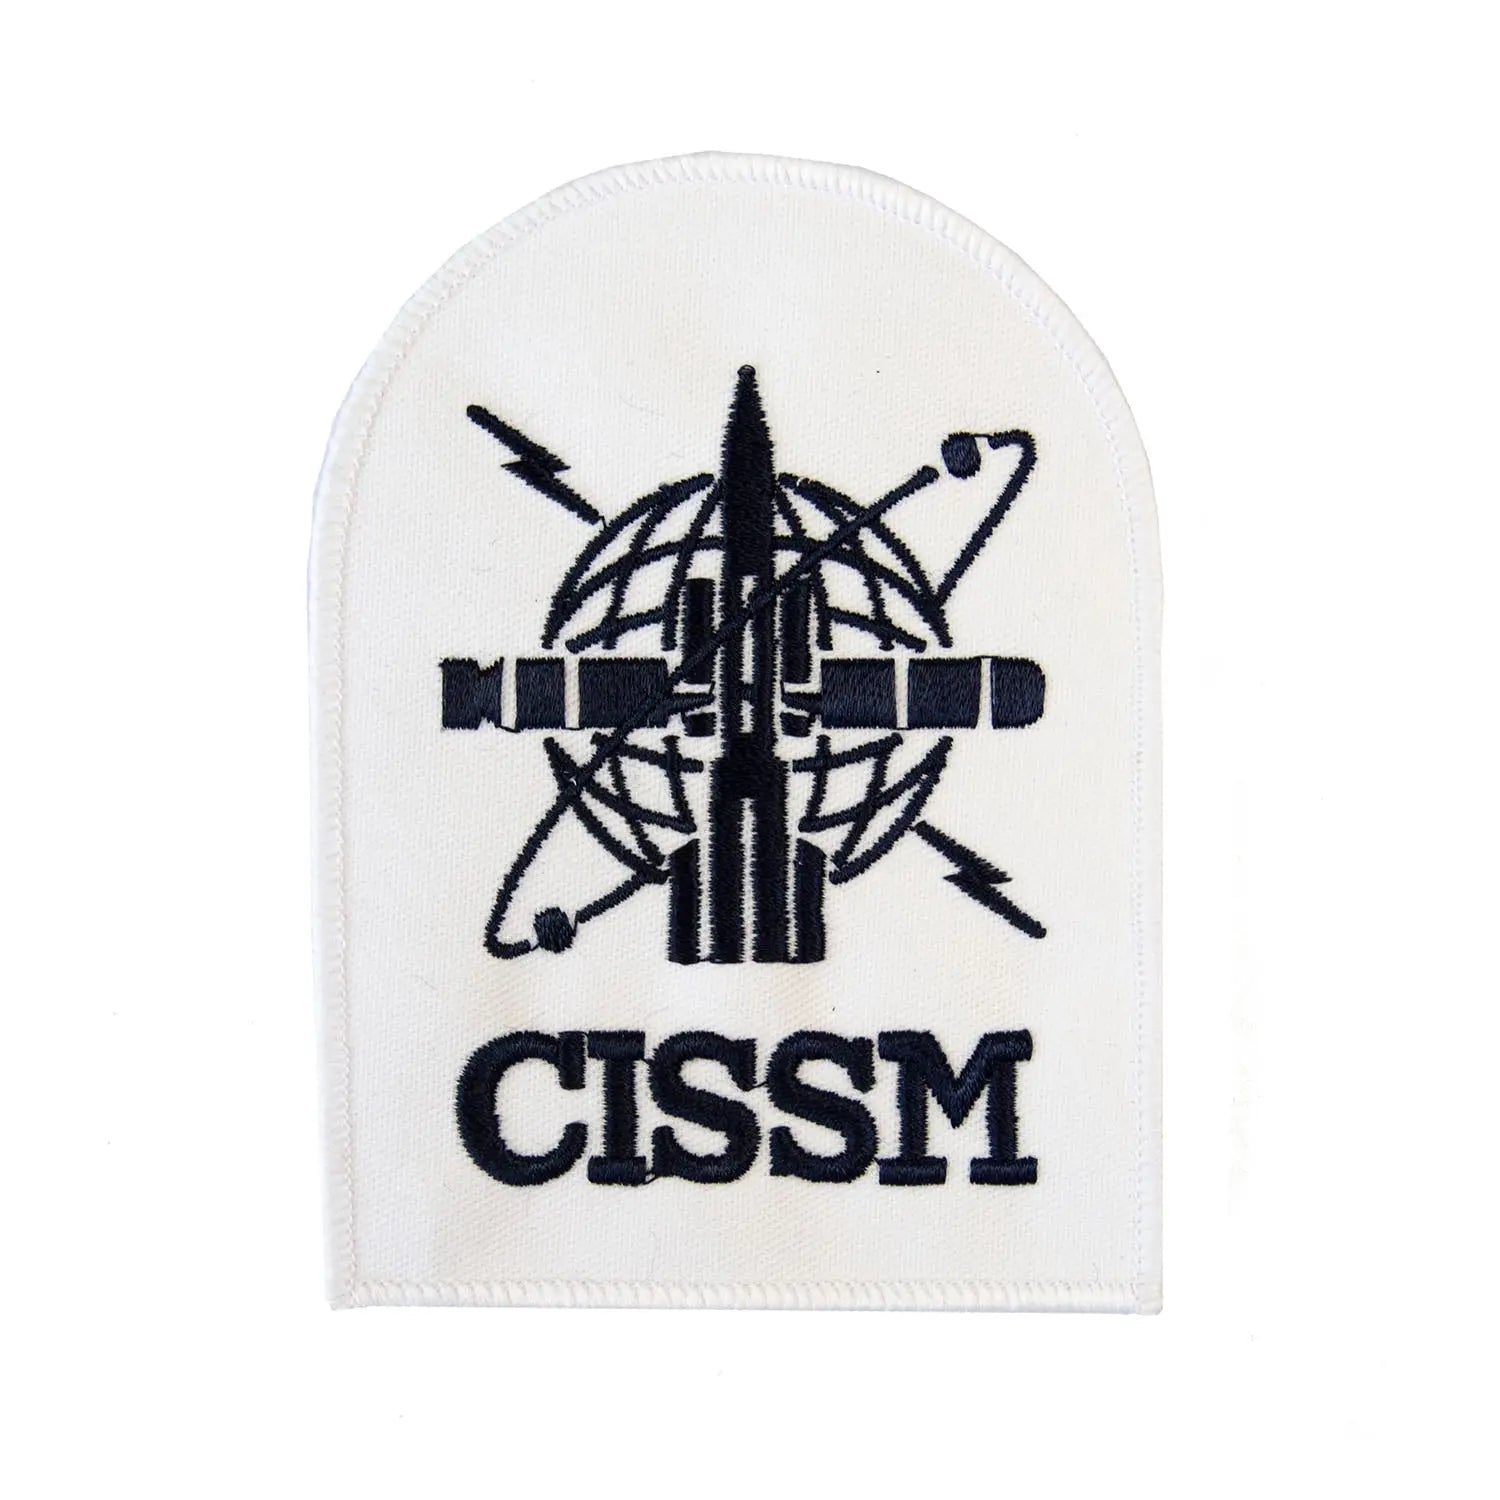 Weapon Engineering Branch CISSM Submarine Basic Rate Royal Navy Qualification Badge wyedean